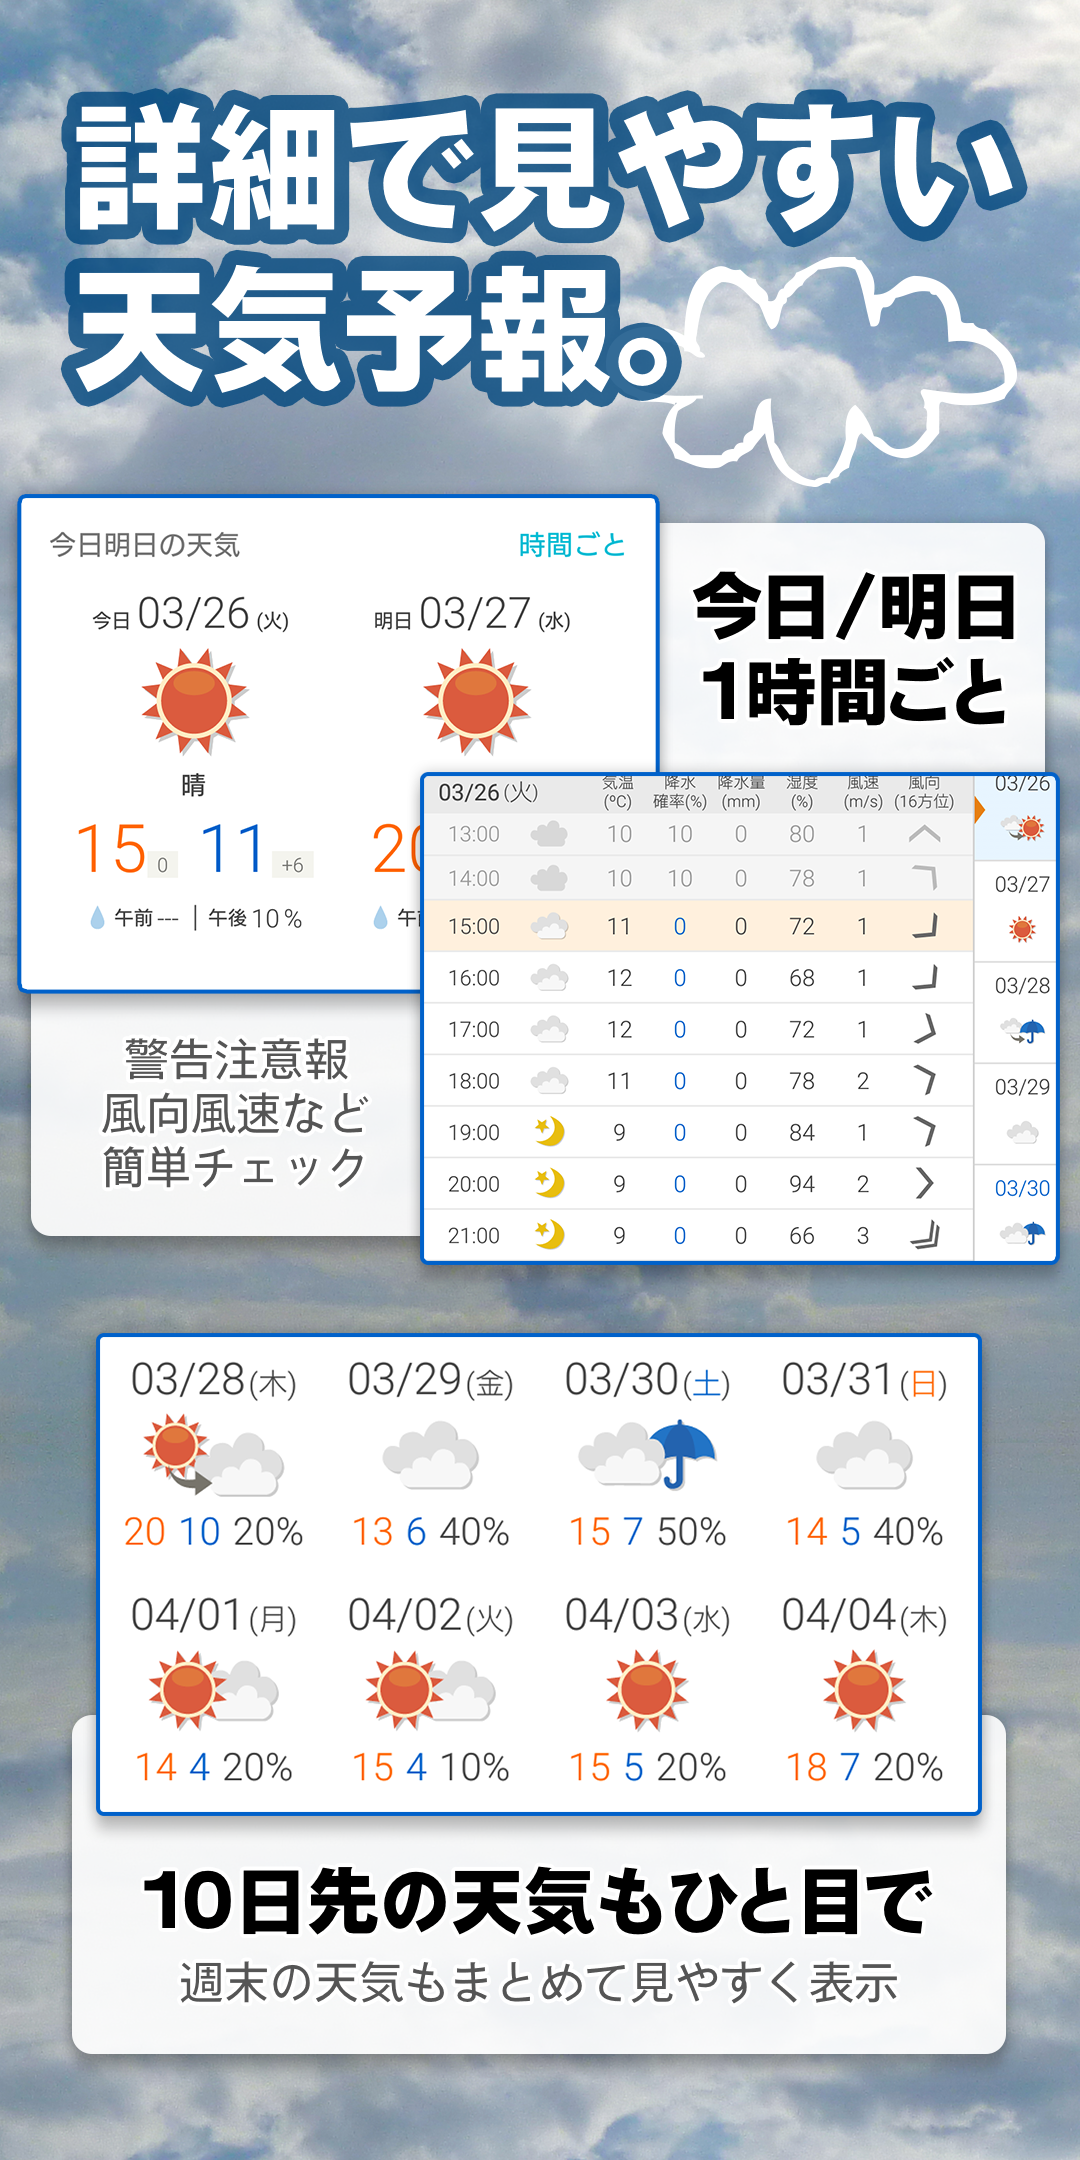 Android application tenki.jp 日本気象協会の天気予報専門アプリ screenshort